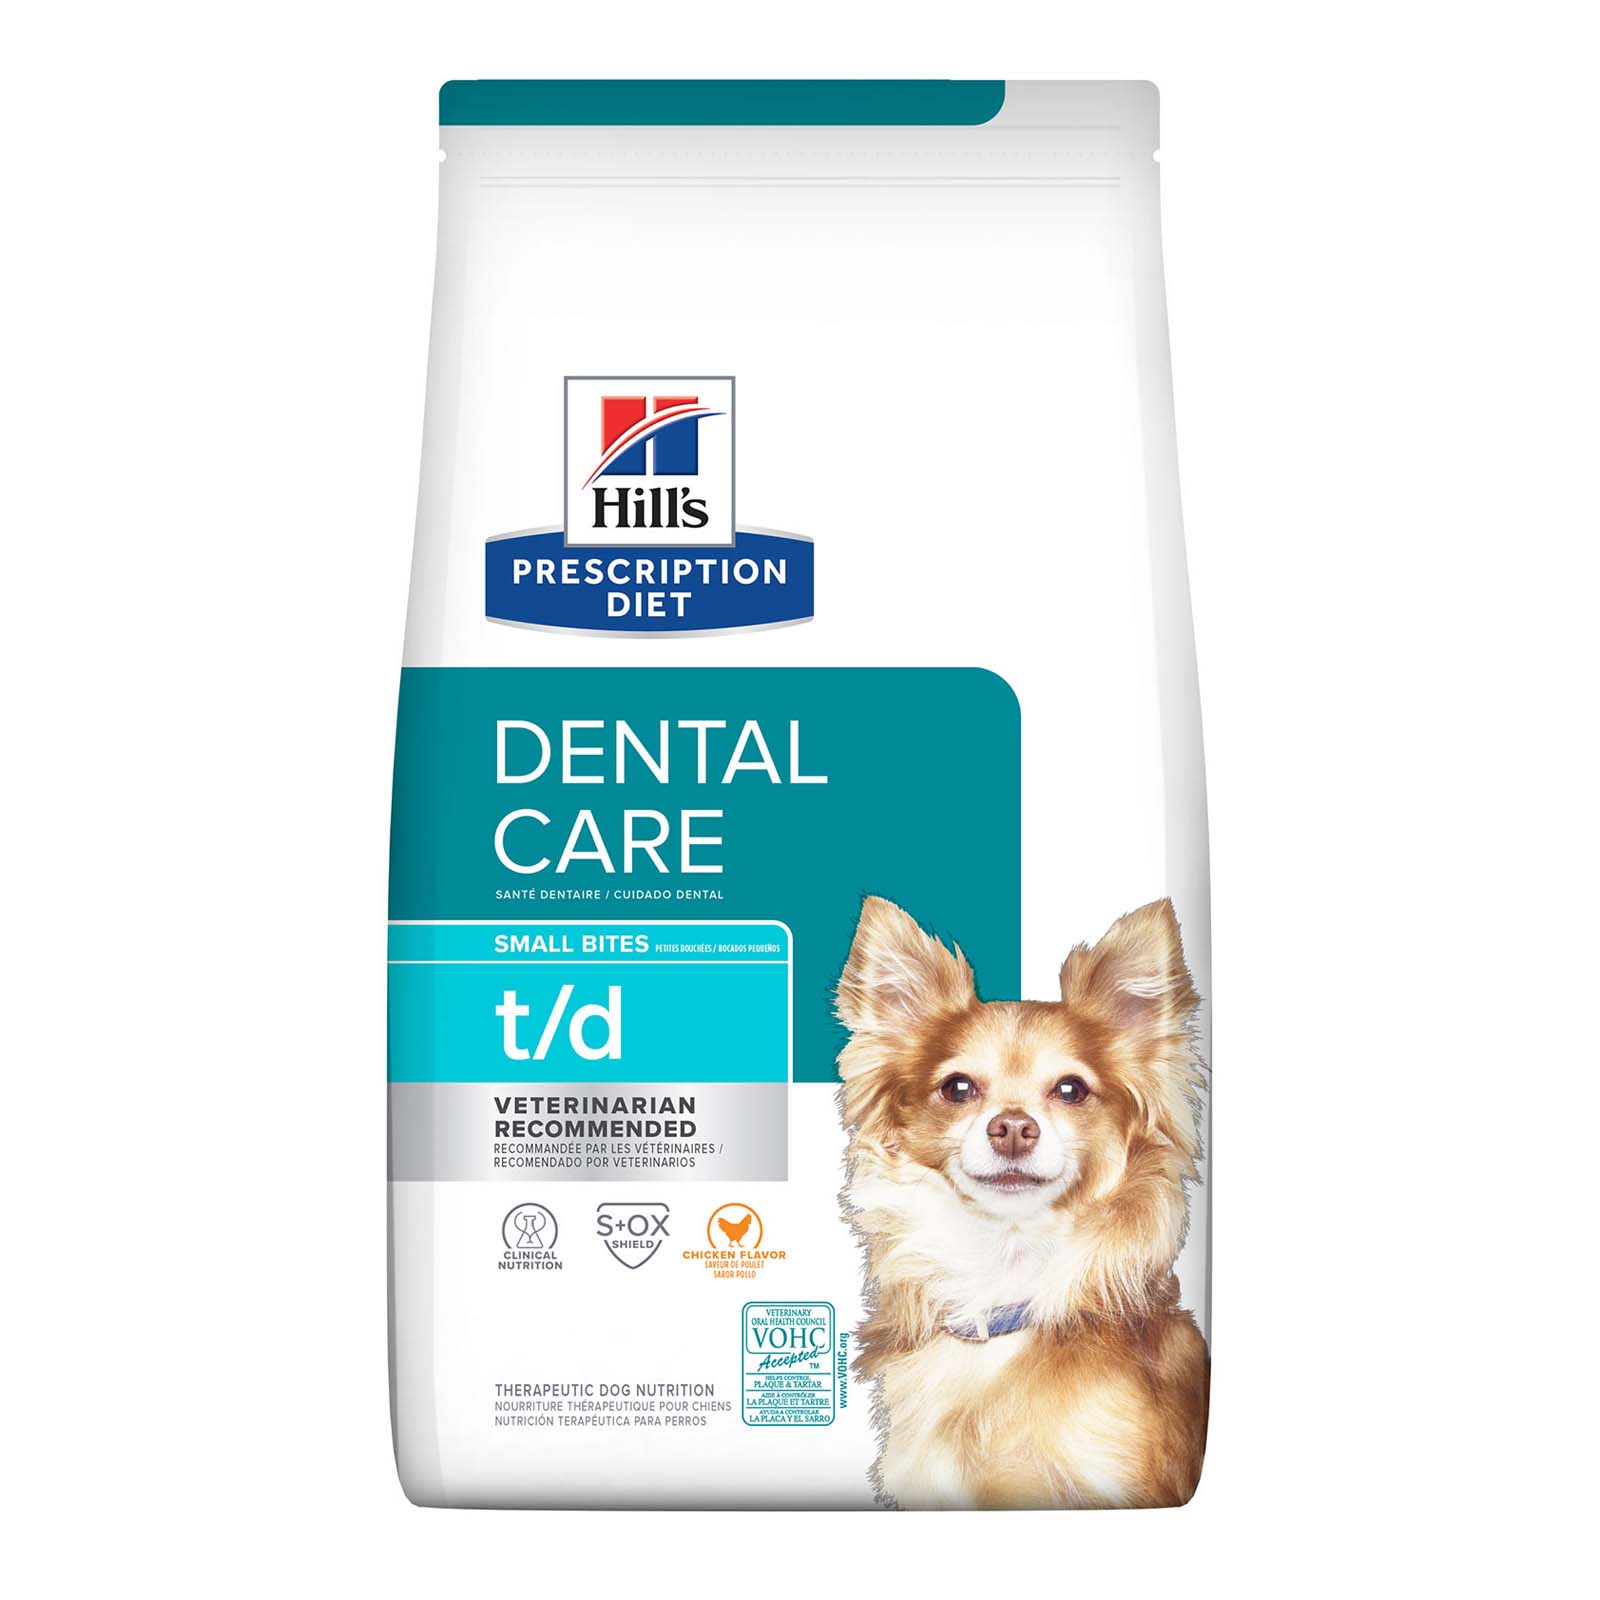 Hill's Prescription Diet t/d Dental Health Small Bites Canine Dry